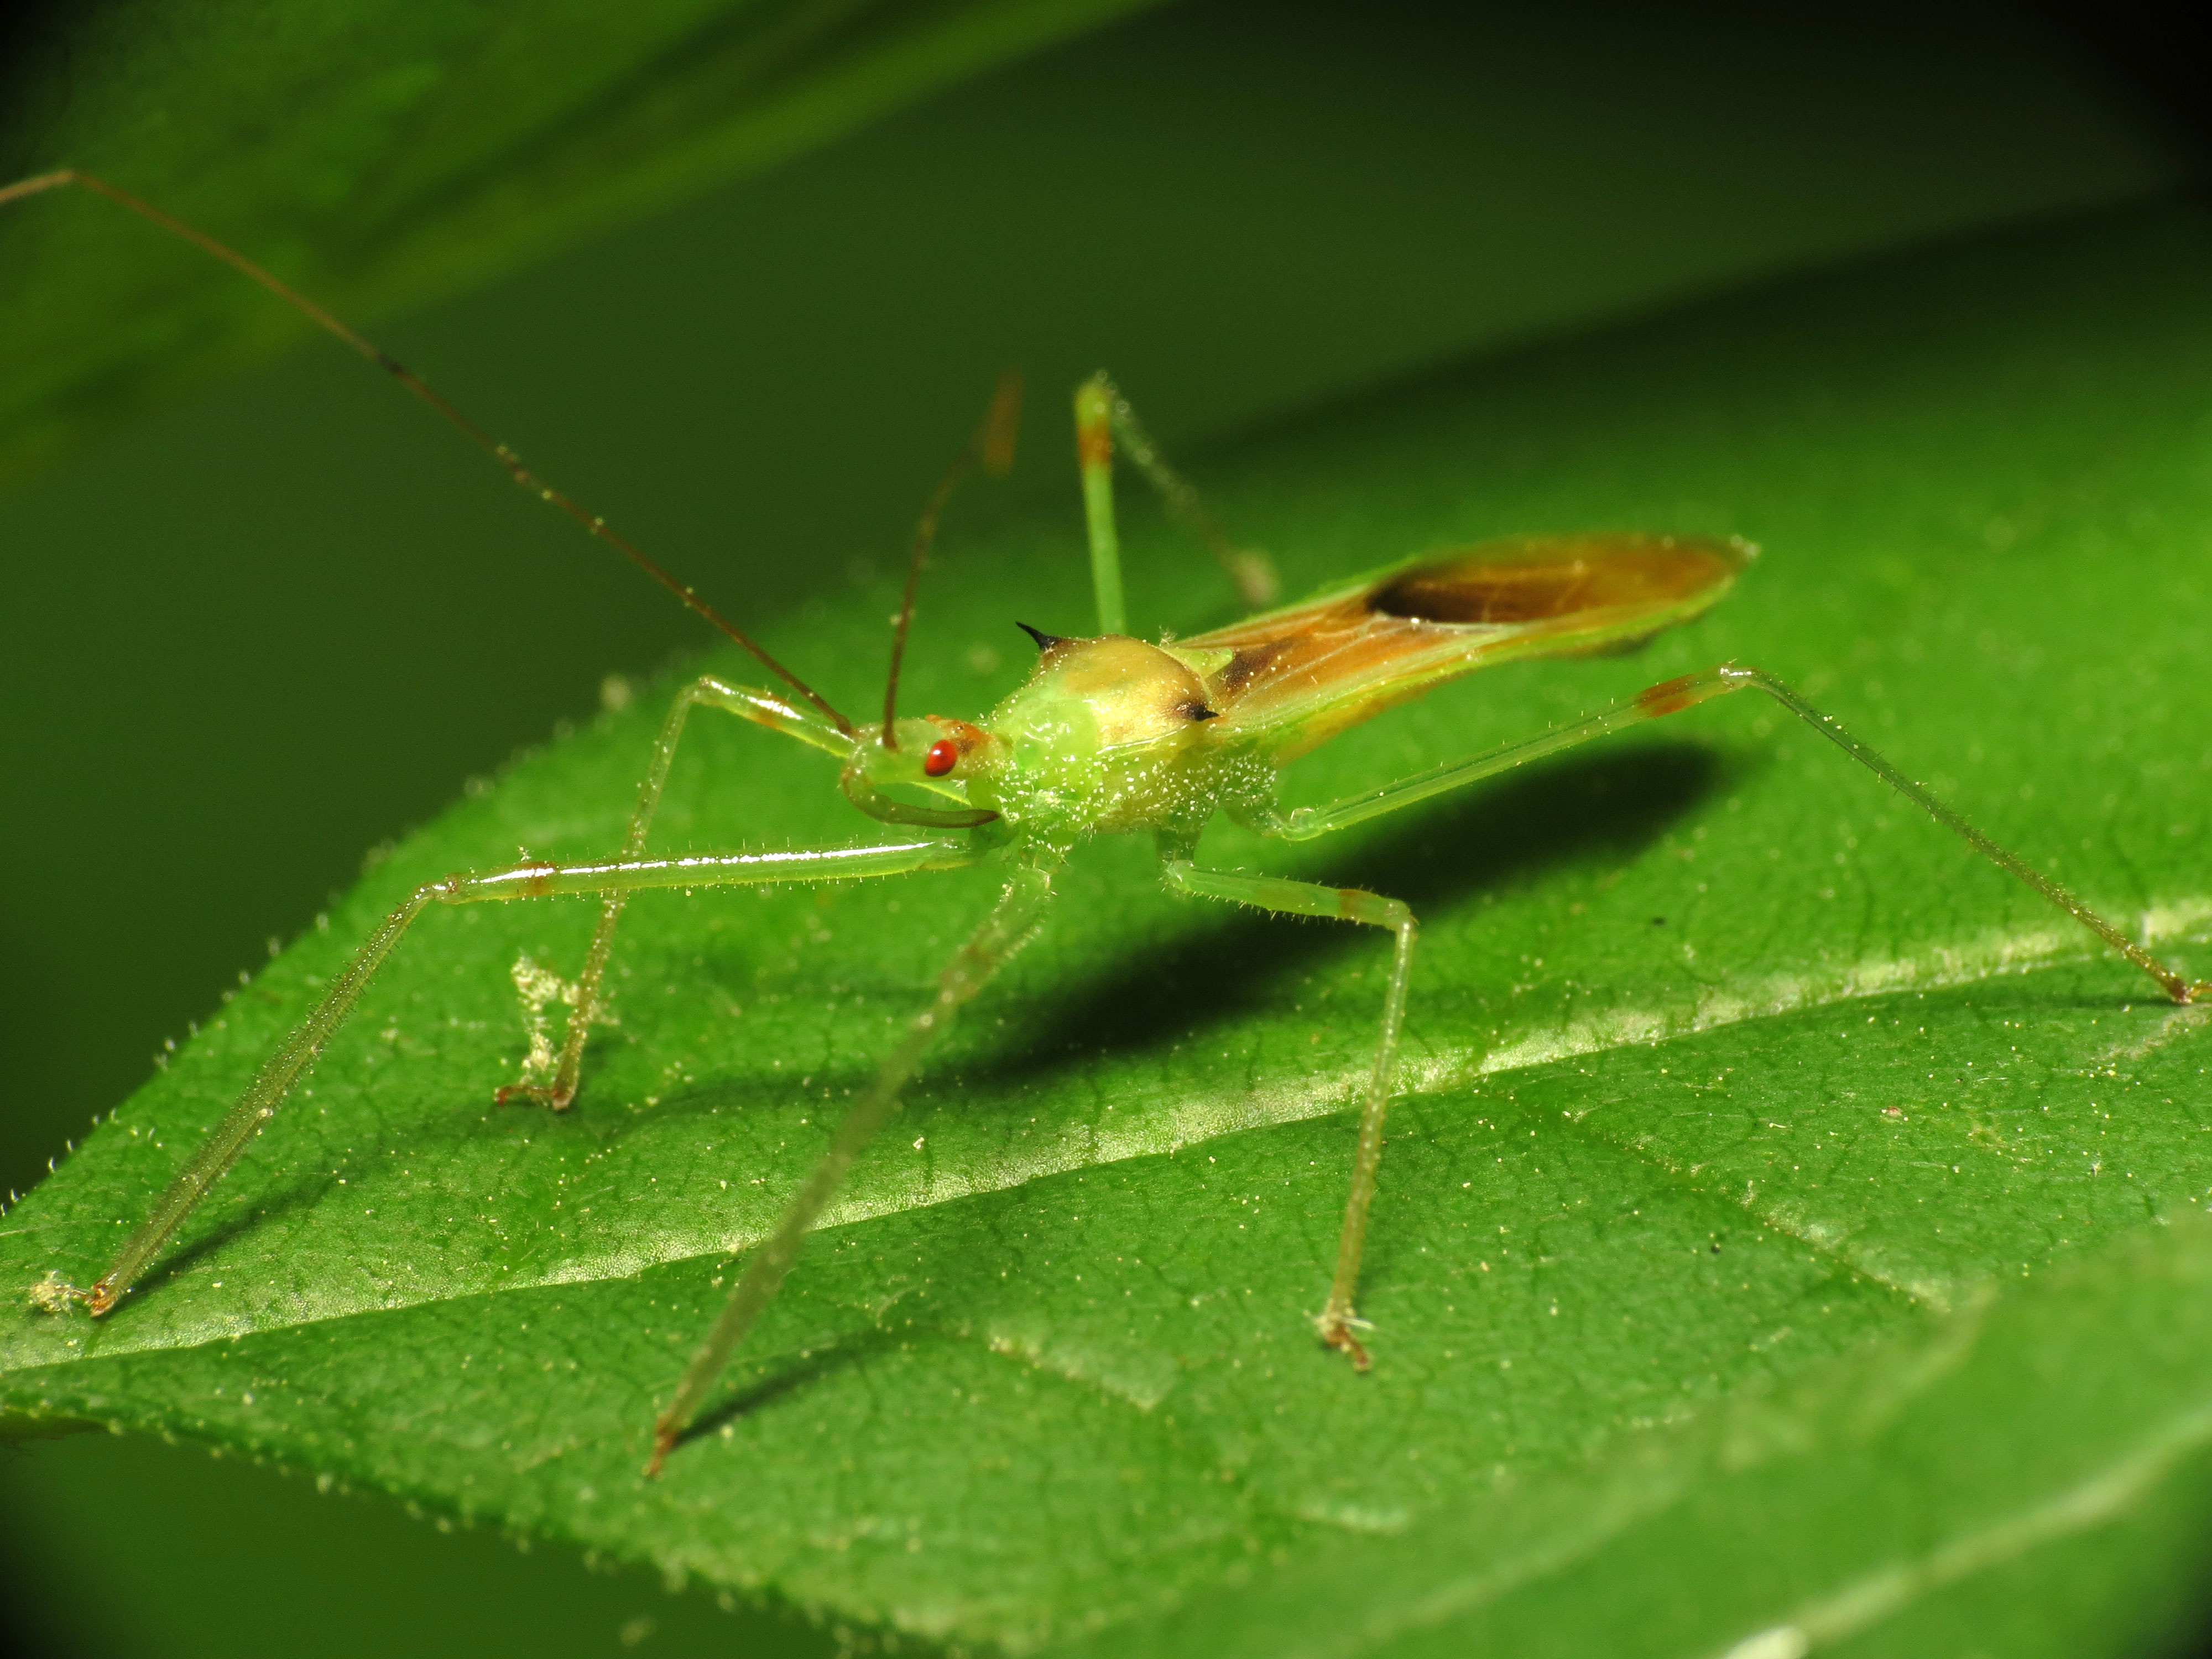 File:Pale Green Assassin Bug (14454596254).jpg - Wikimedia Commons